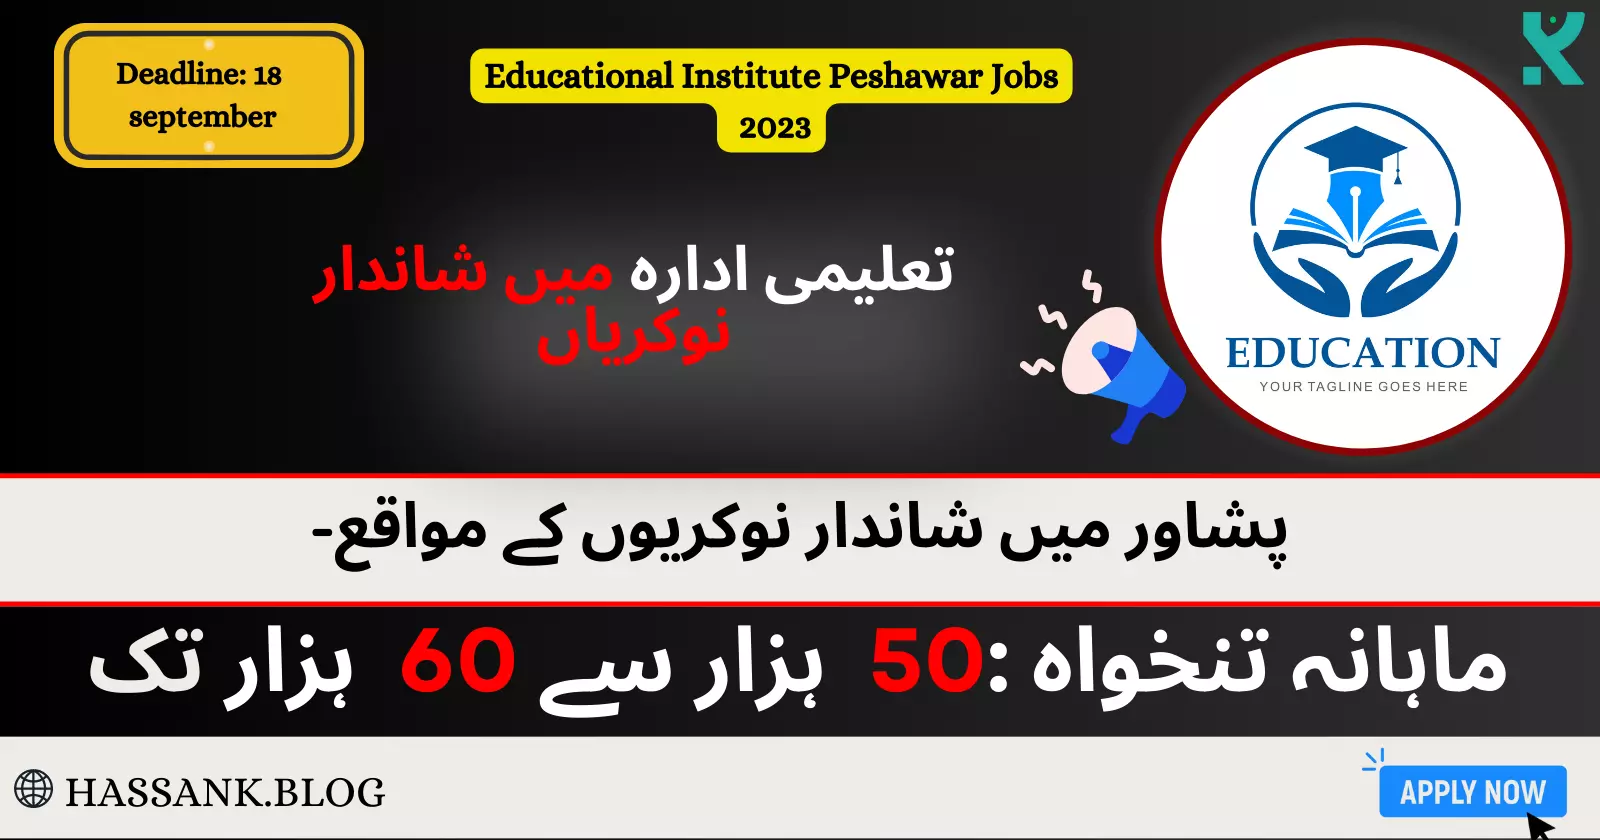 Educational Institute Peshawar